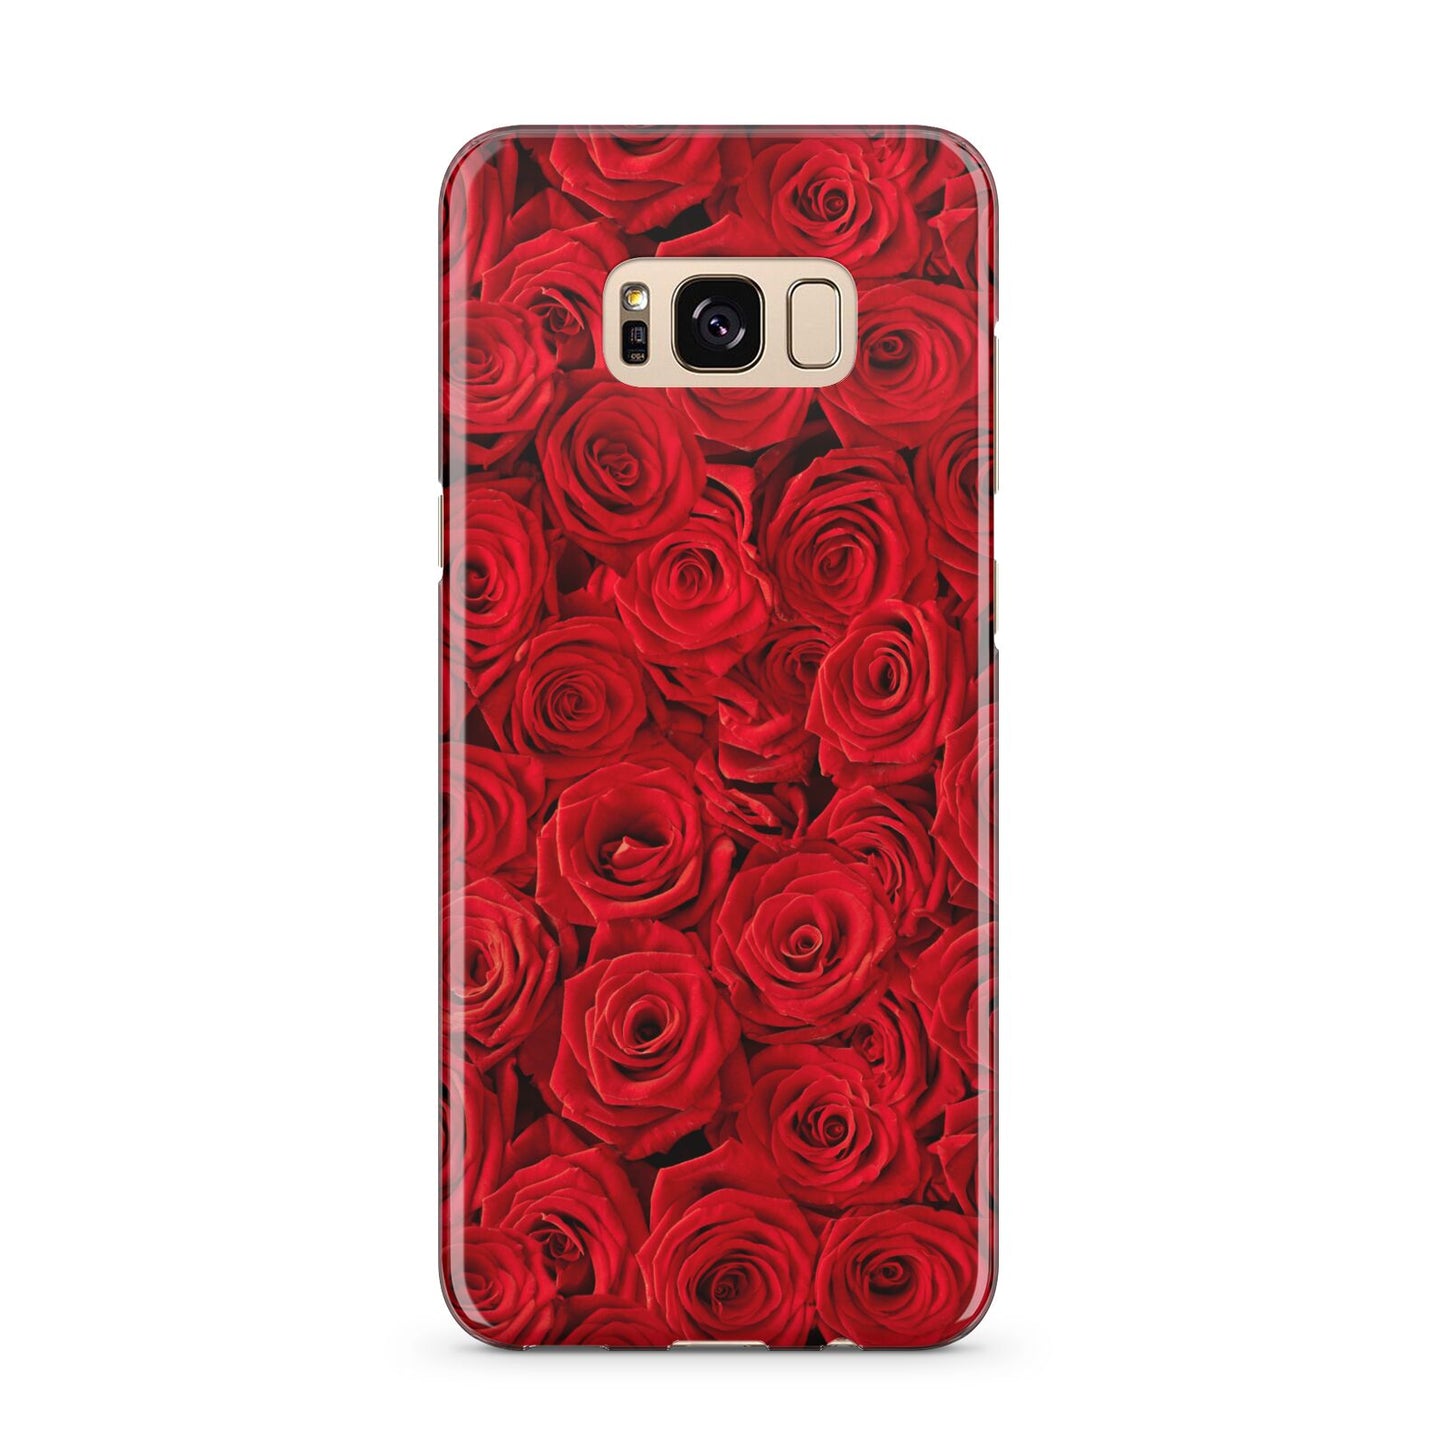 Red Rose Samsung Galaxy S8 Plus Case